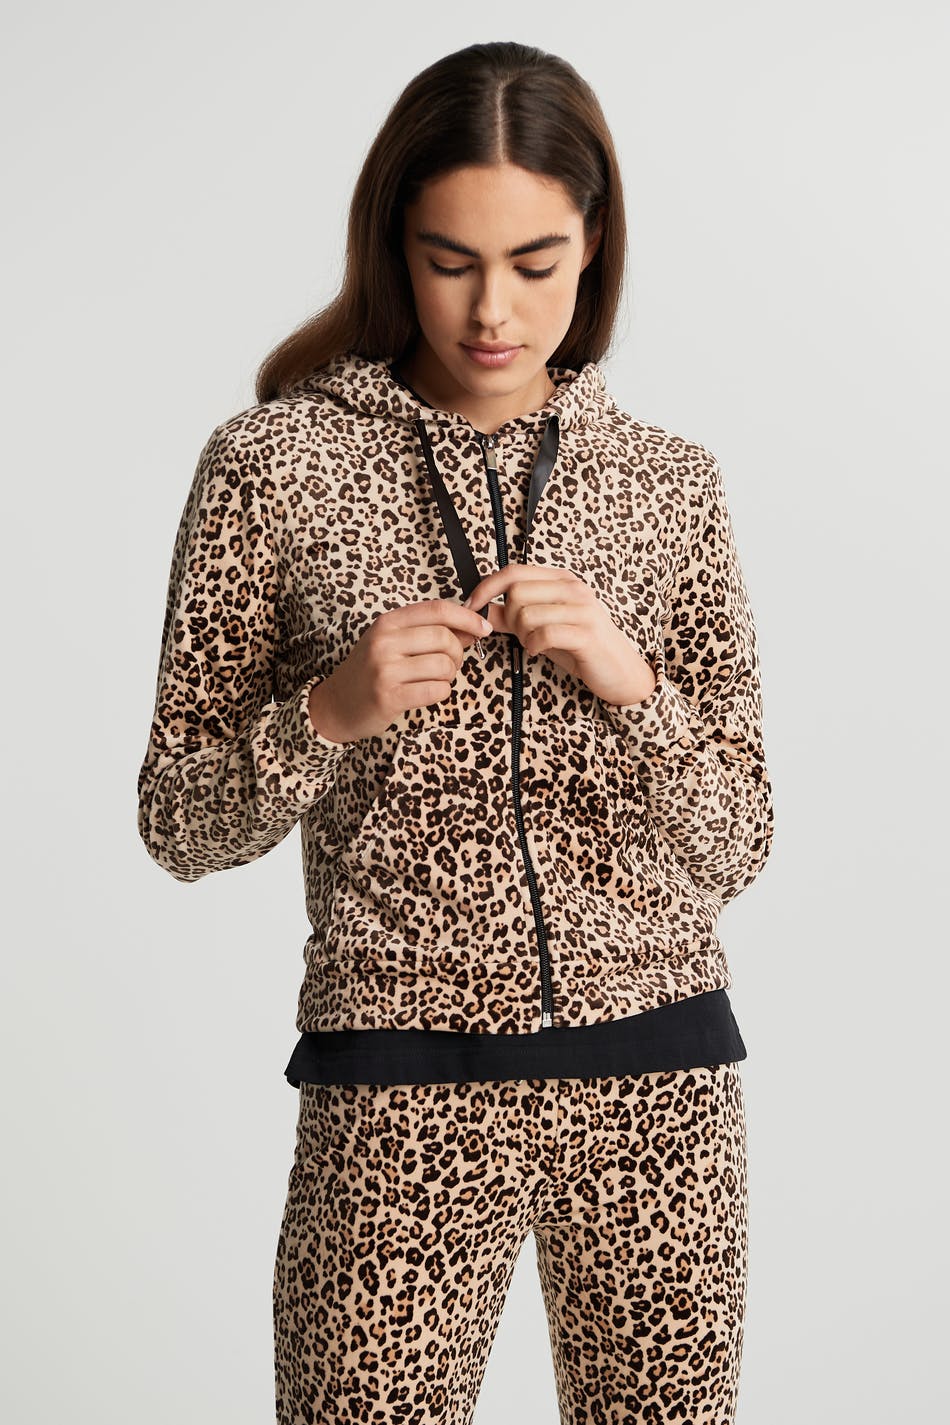 Cecilia hoodie hoodies & sweatshirts fra Gina Tricot til dame i Leopard - Pashion.dk